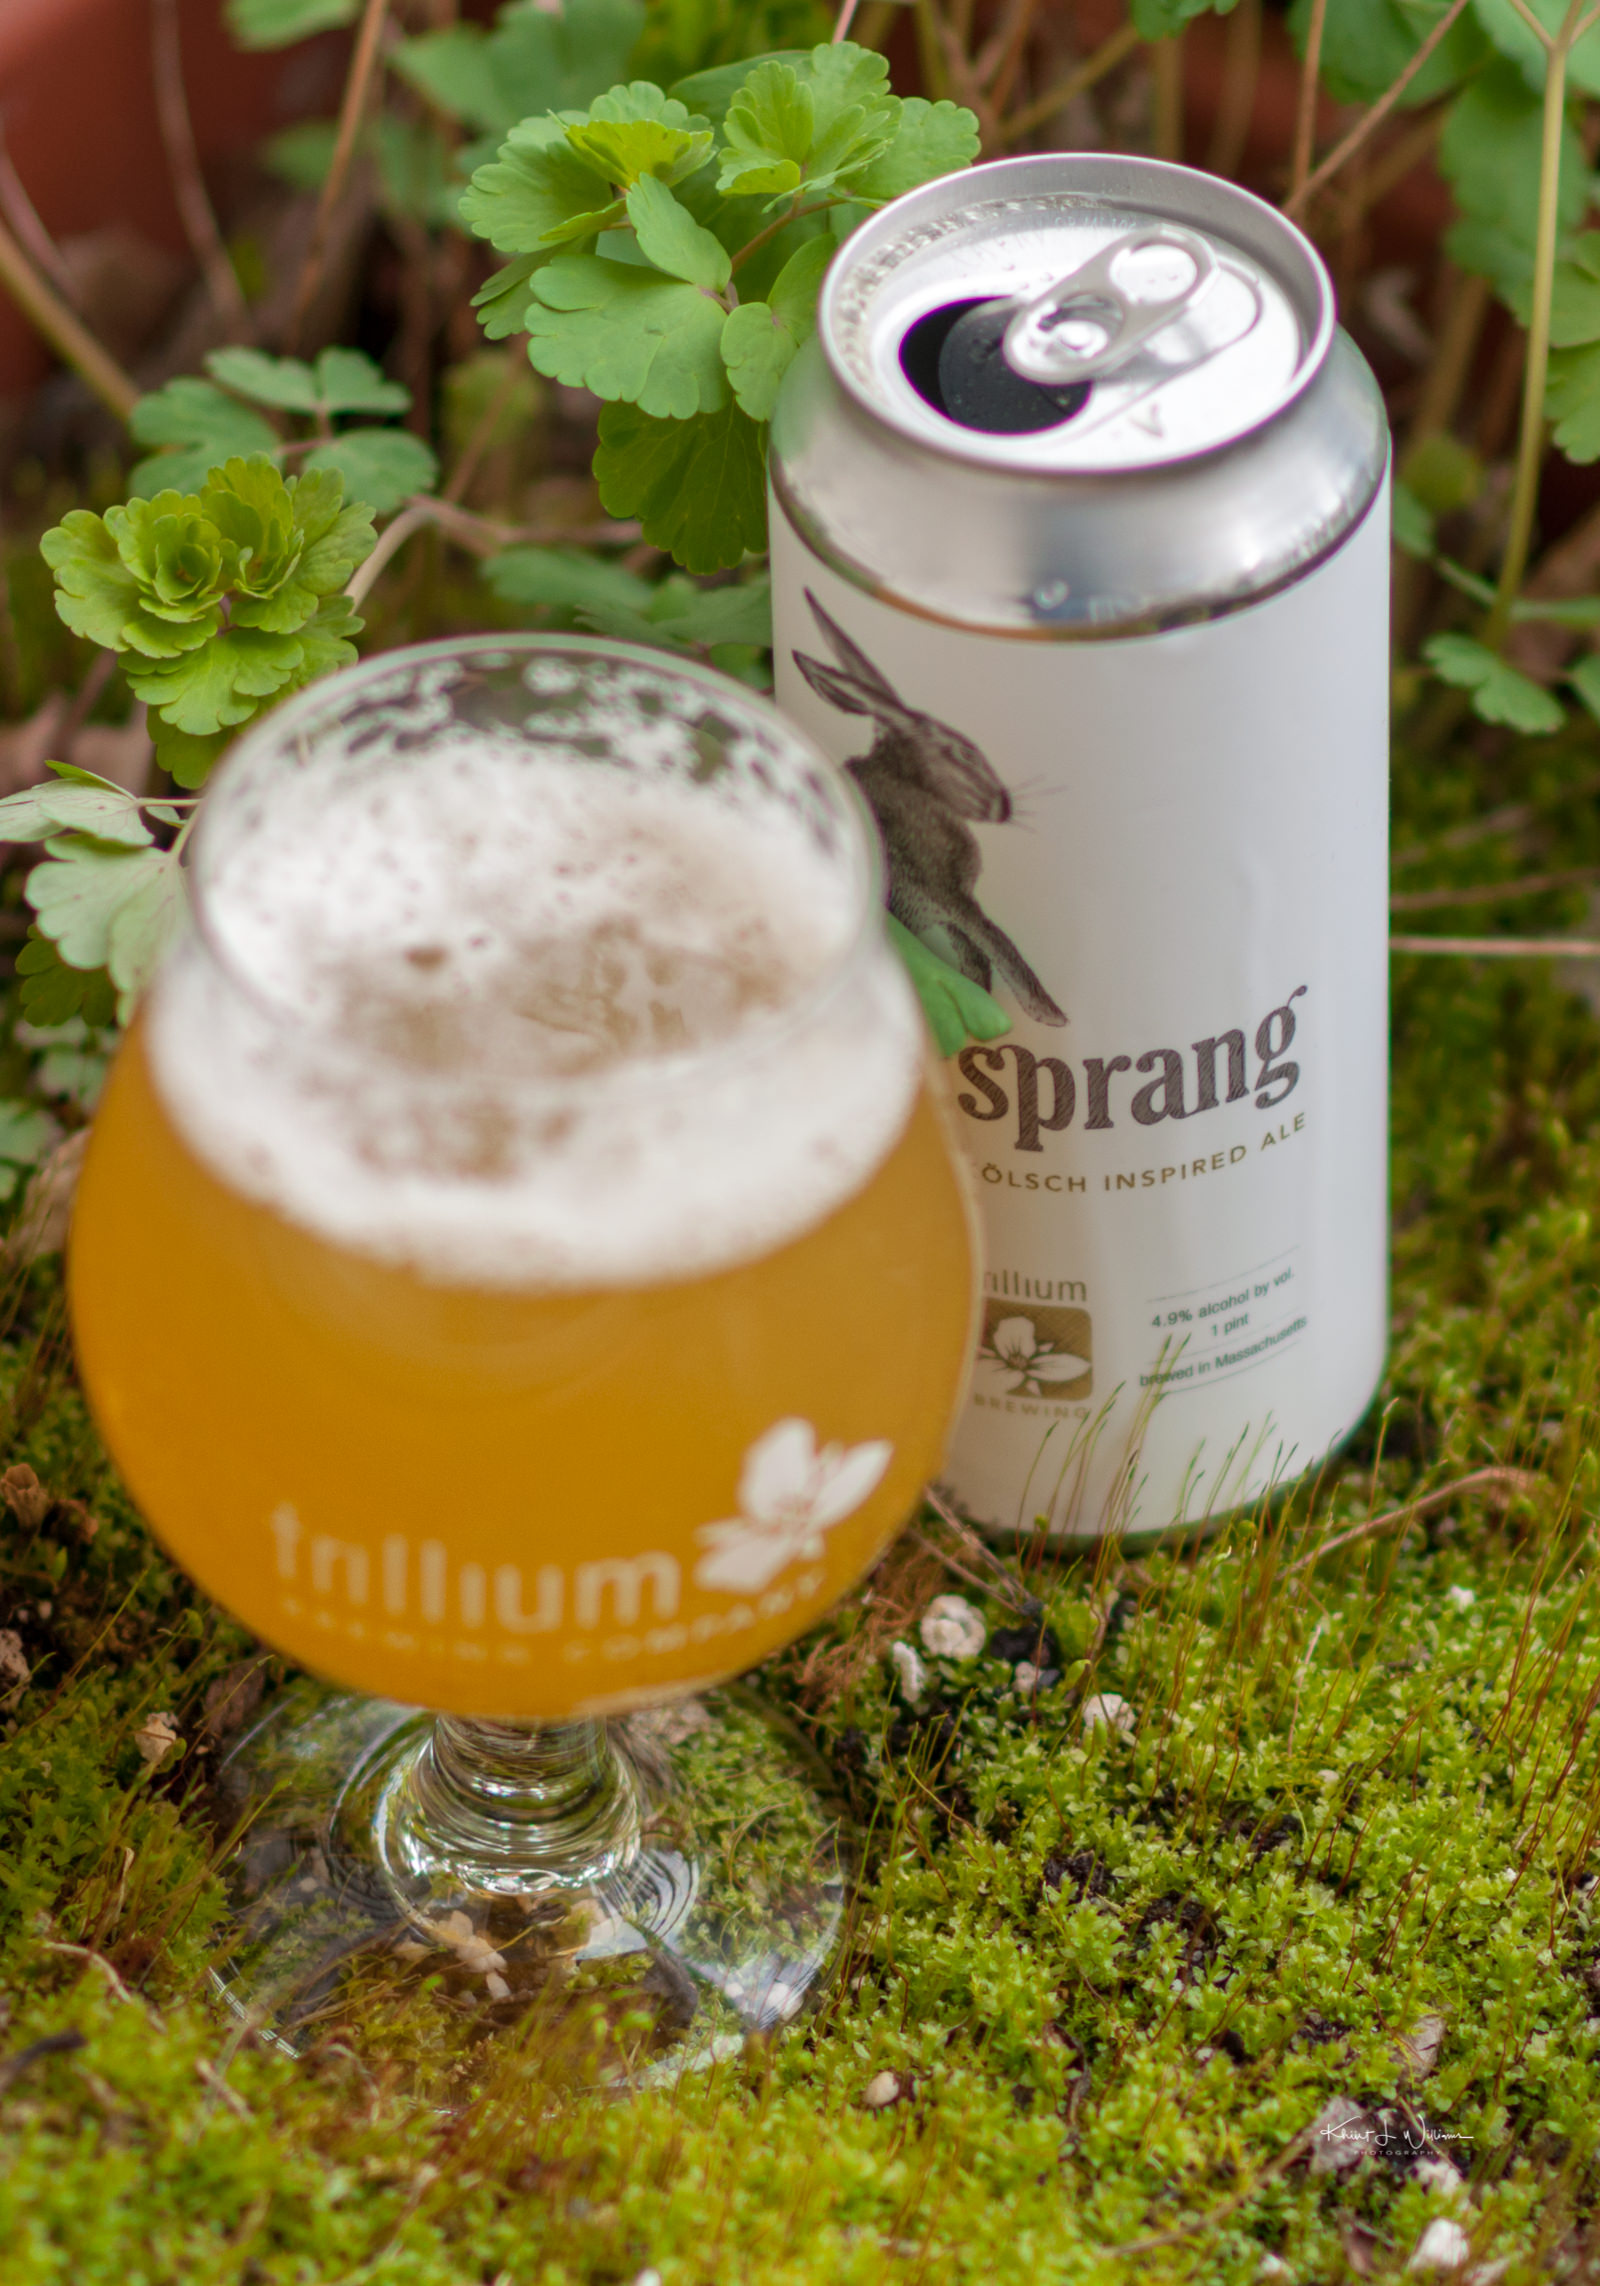 Trillium Brewing Company's Sprang